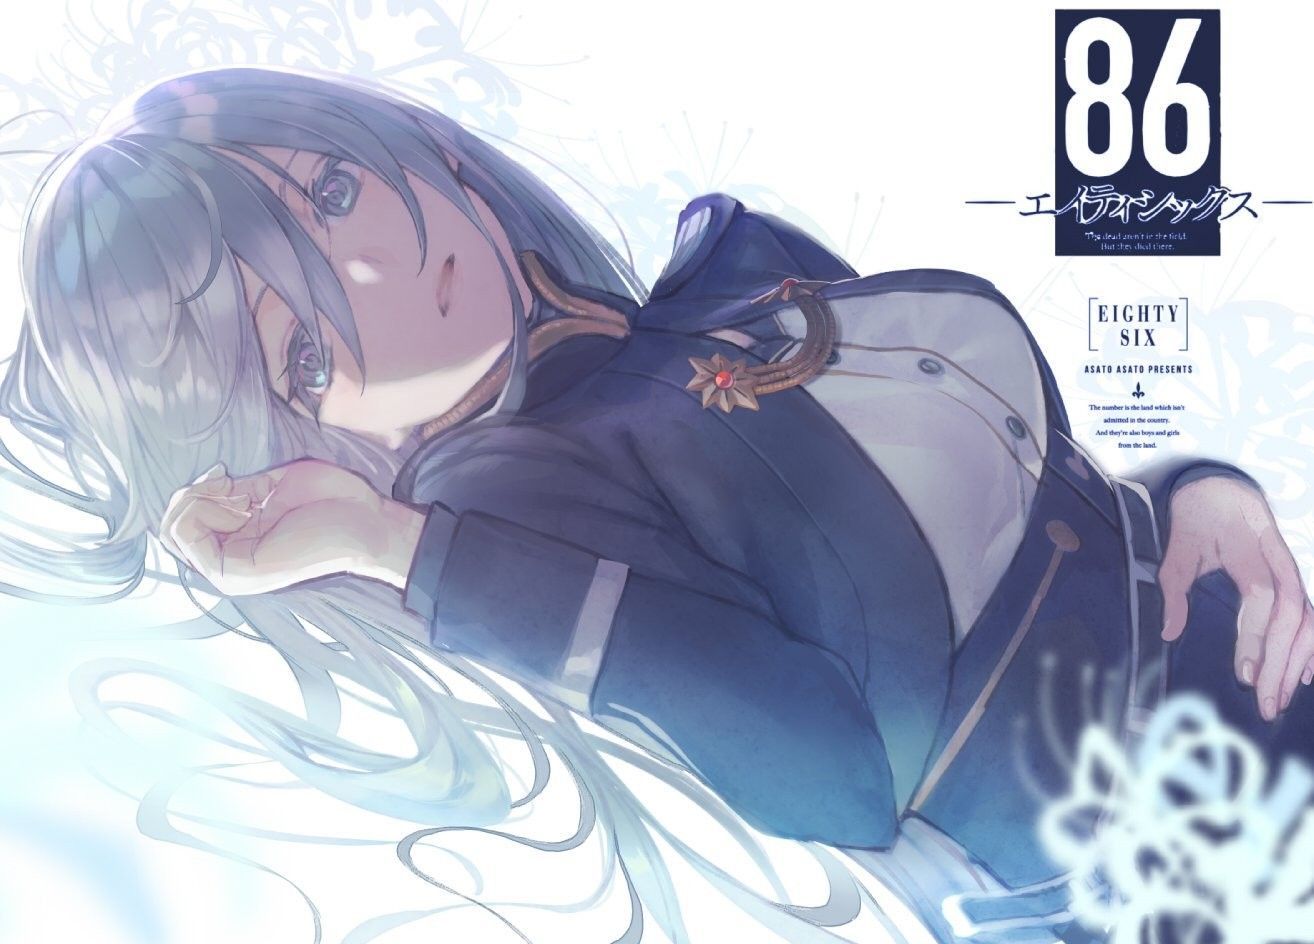 Eighty six light novel. 芸術的アニメ少女, アニメの天使, イラスト